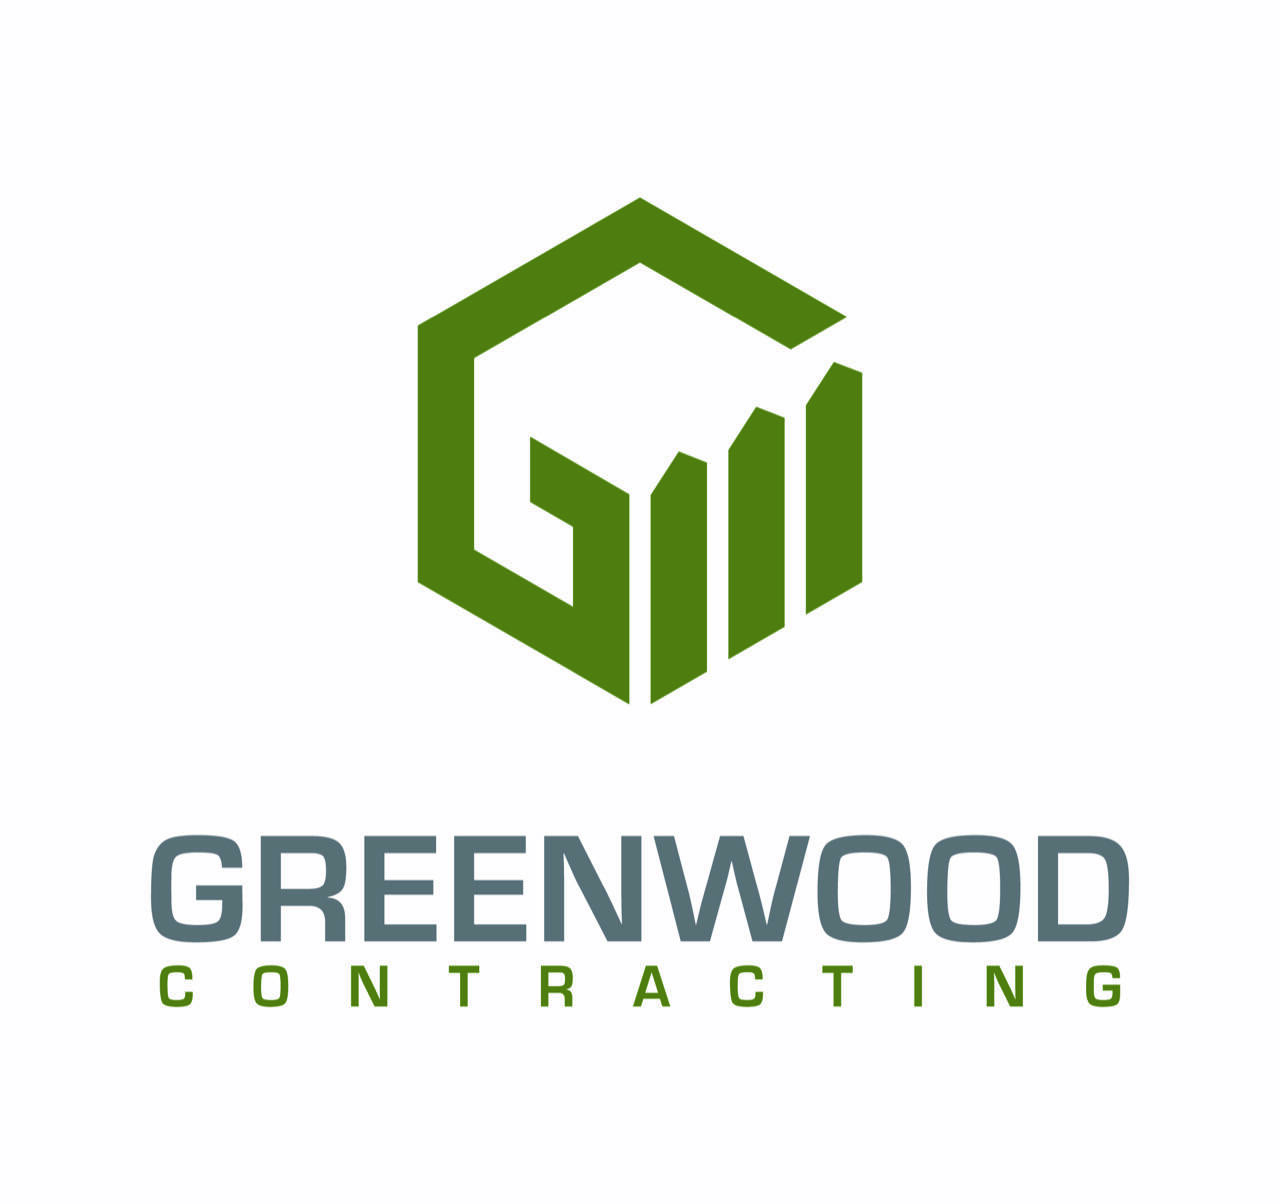 Greenwood Contracting